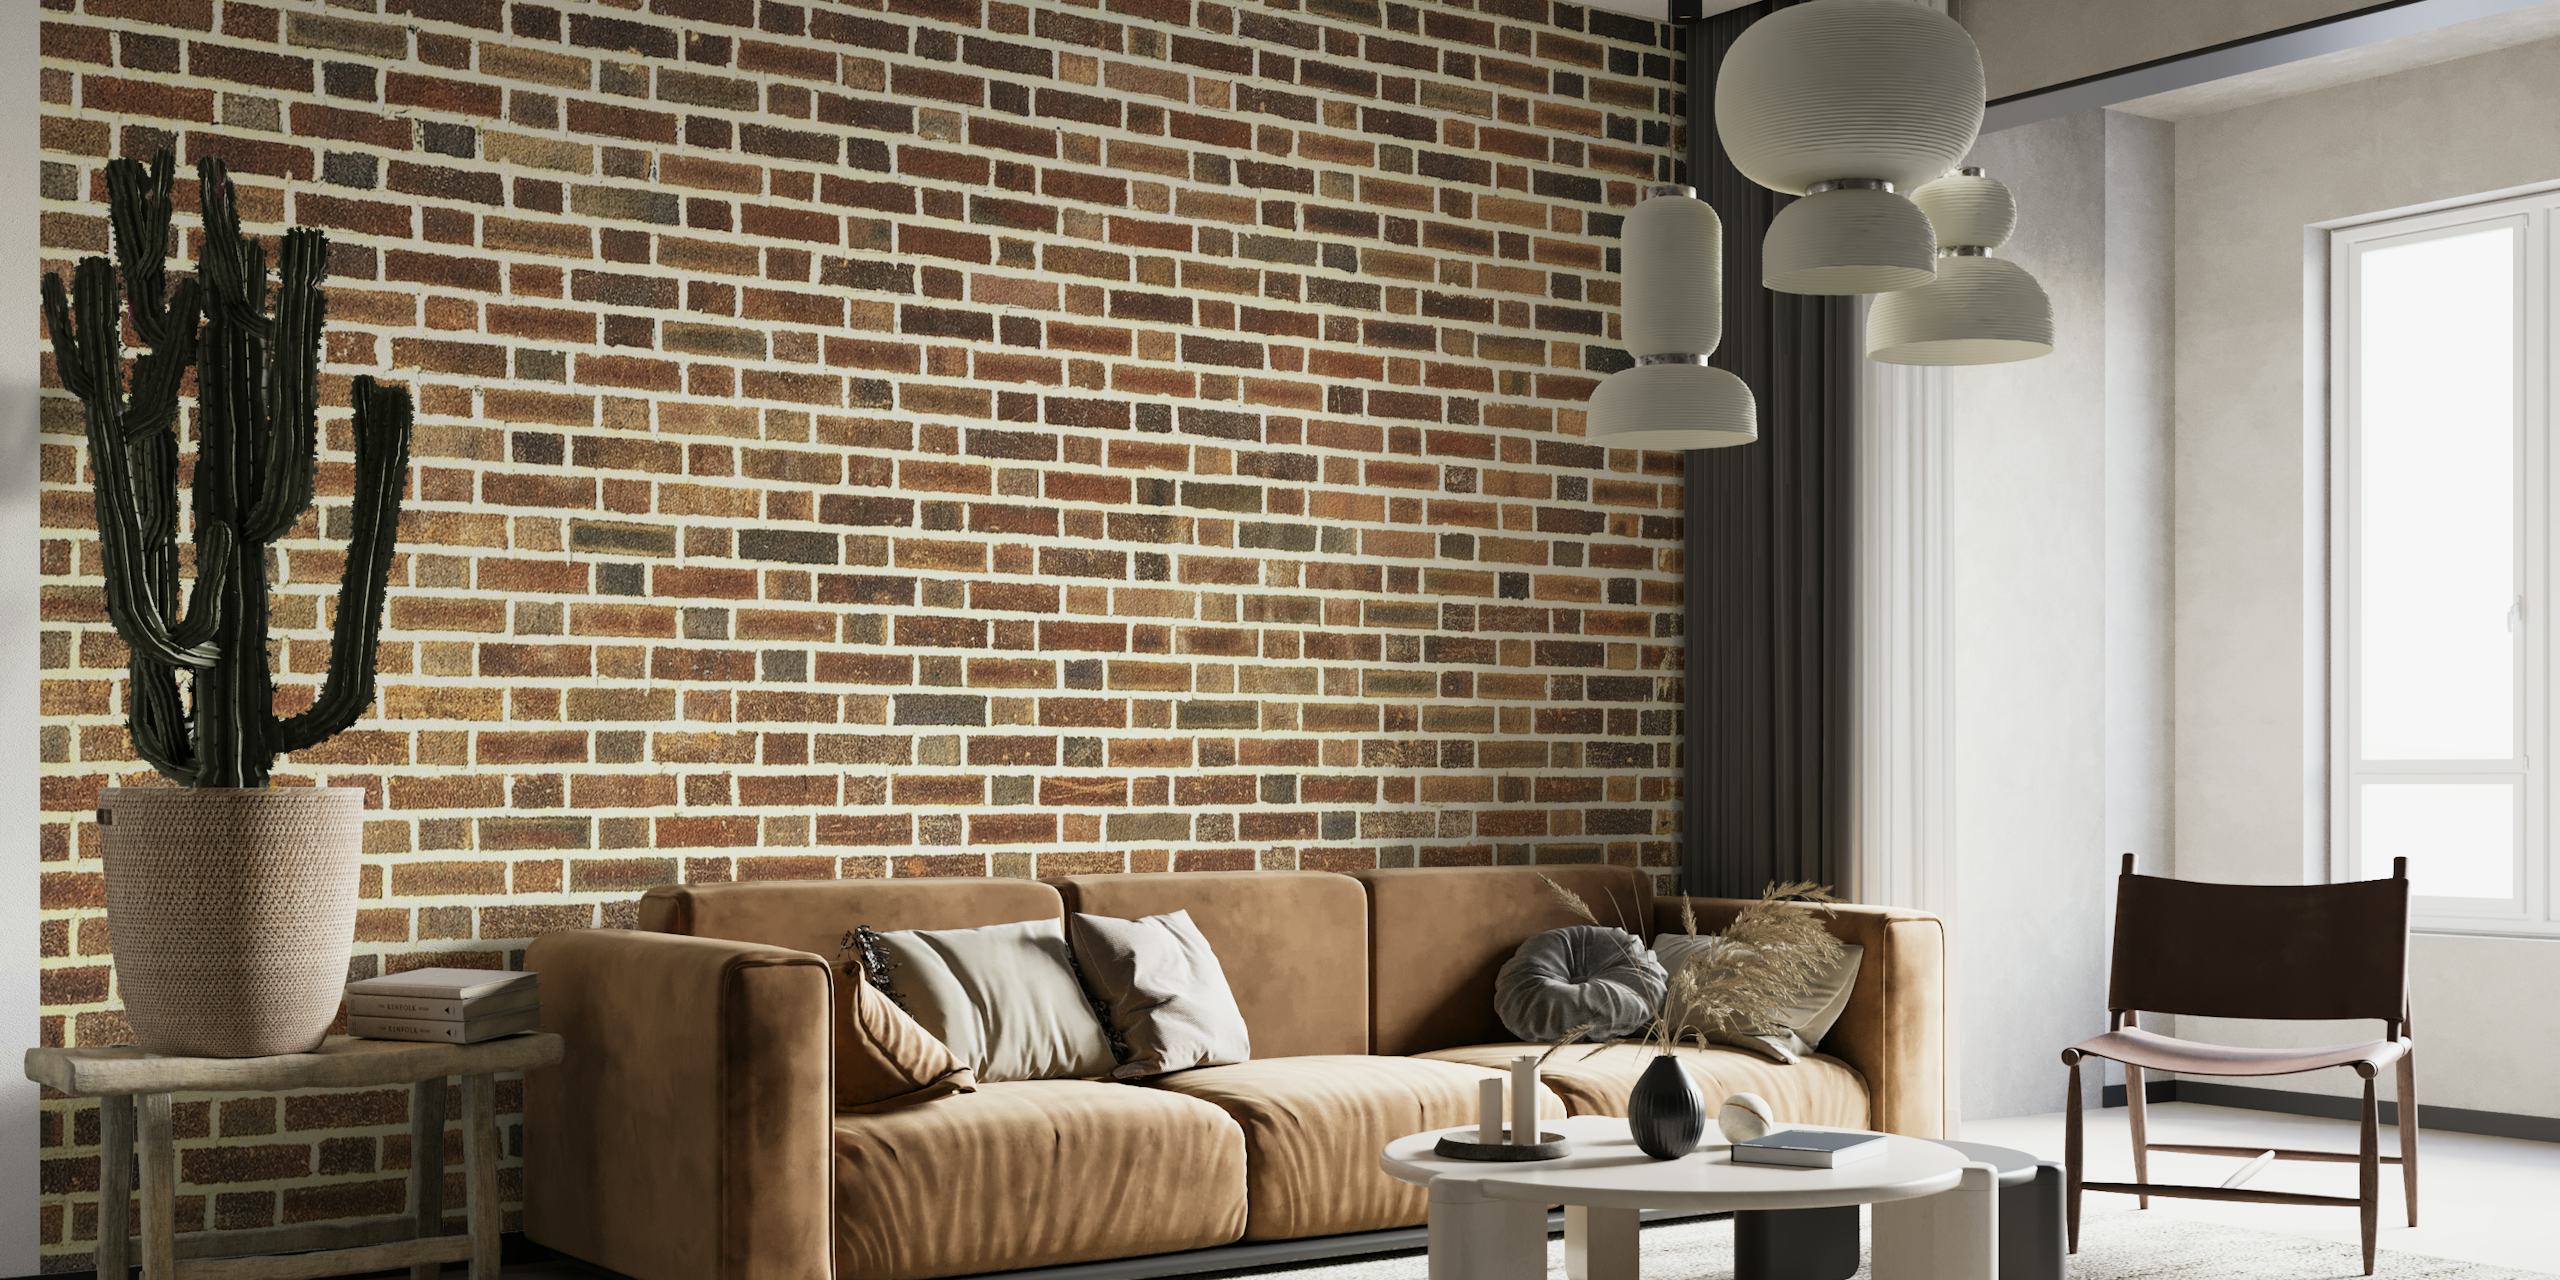 Basic Bricks wallpaper